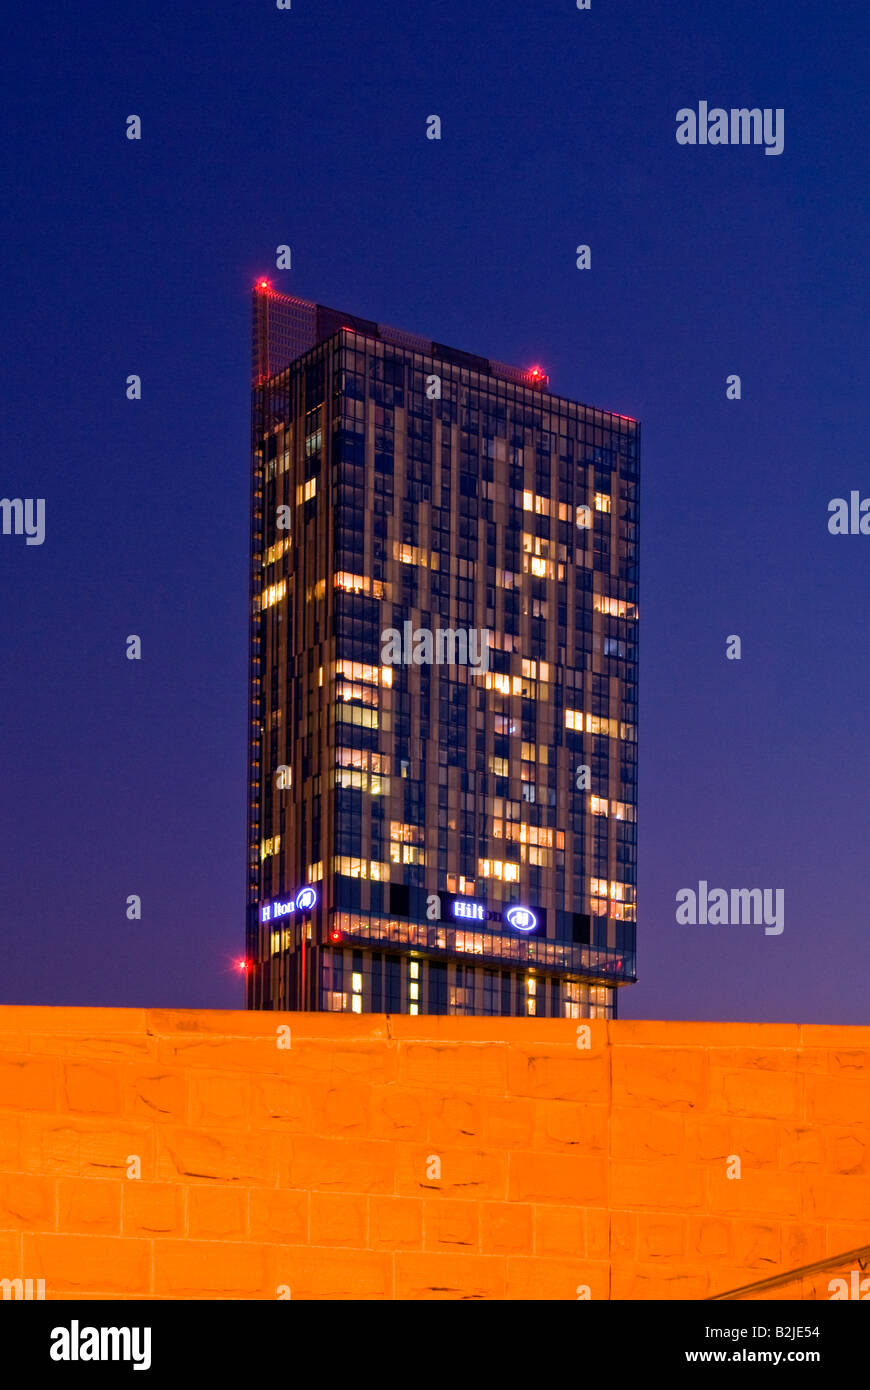 Hilton hotel at night, Manchester UK Stock Photo